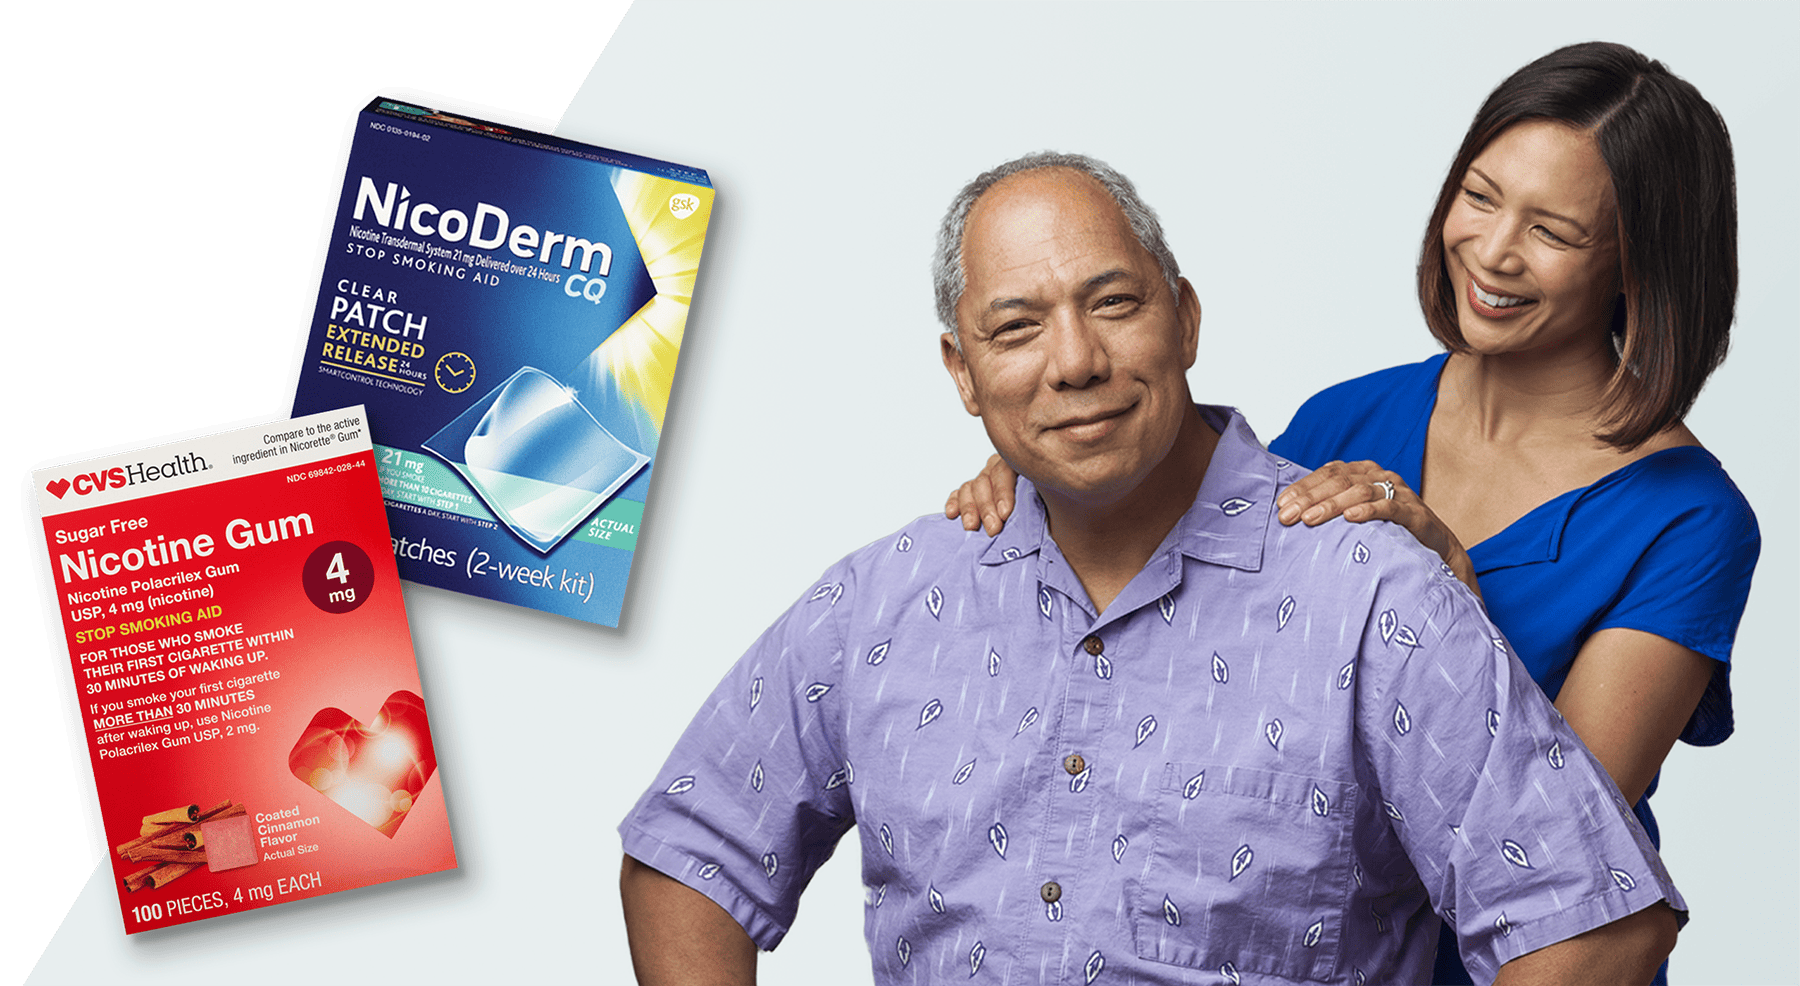 NicoDerm Patch and CVS Health Nicotine Gum